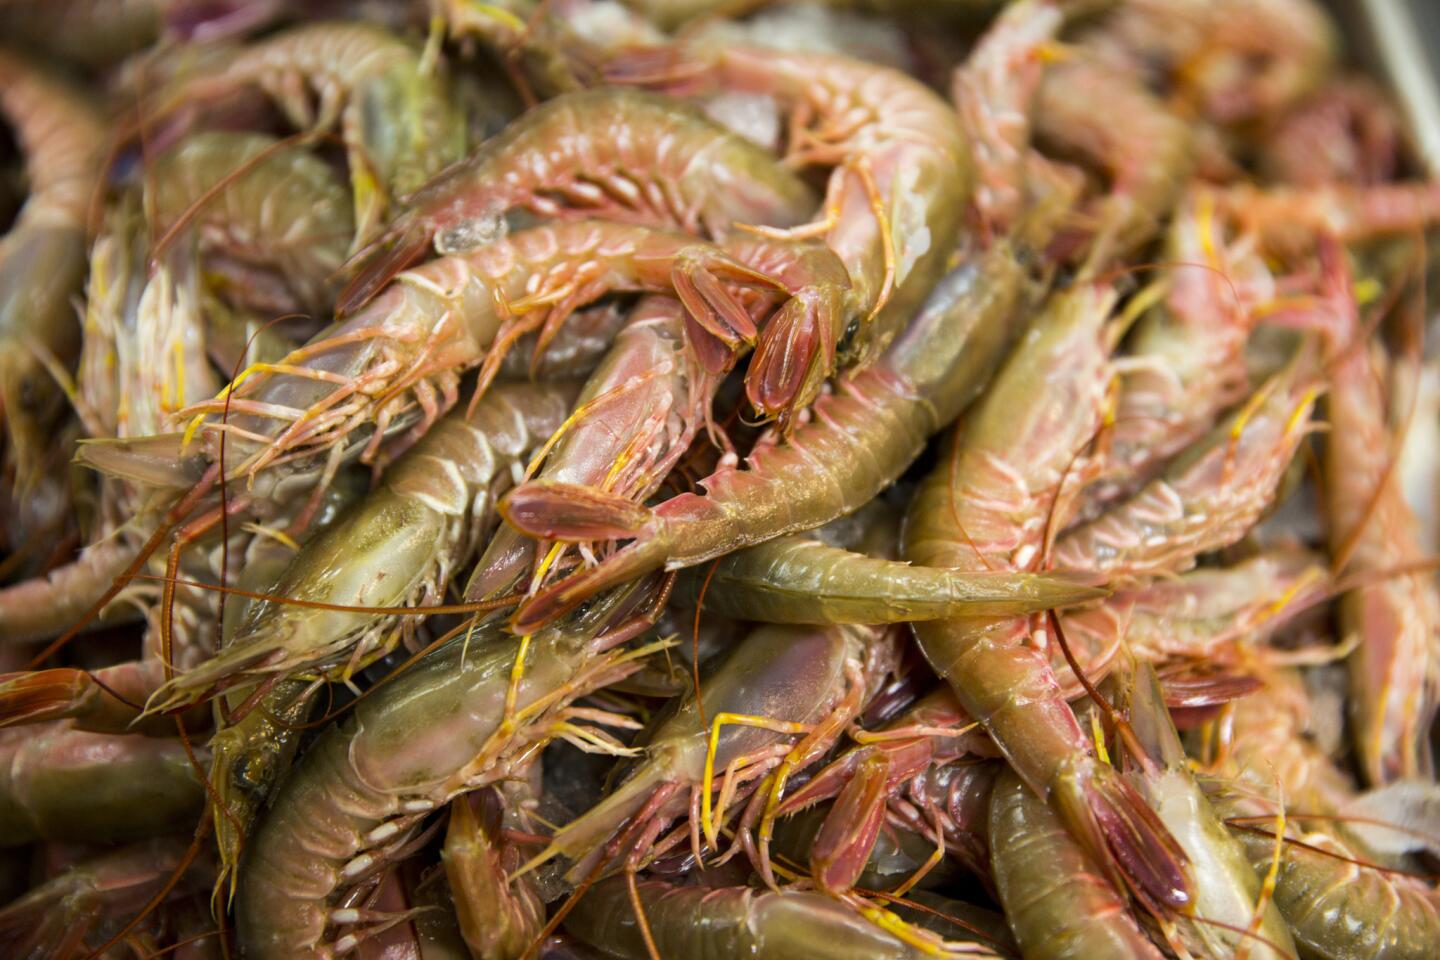 Fresh-caught ridgeback shrimp.